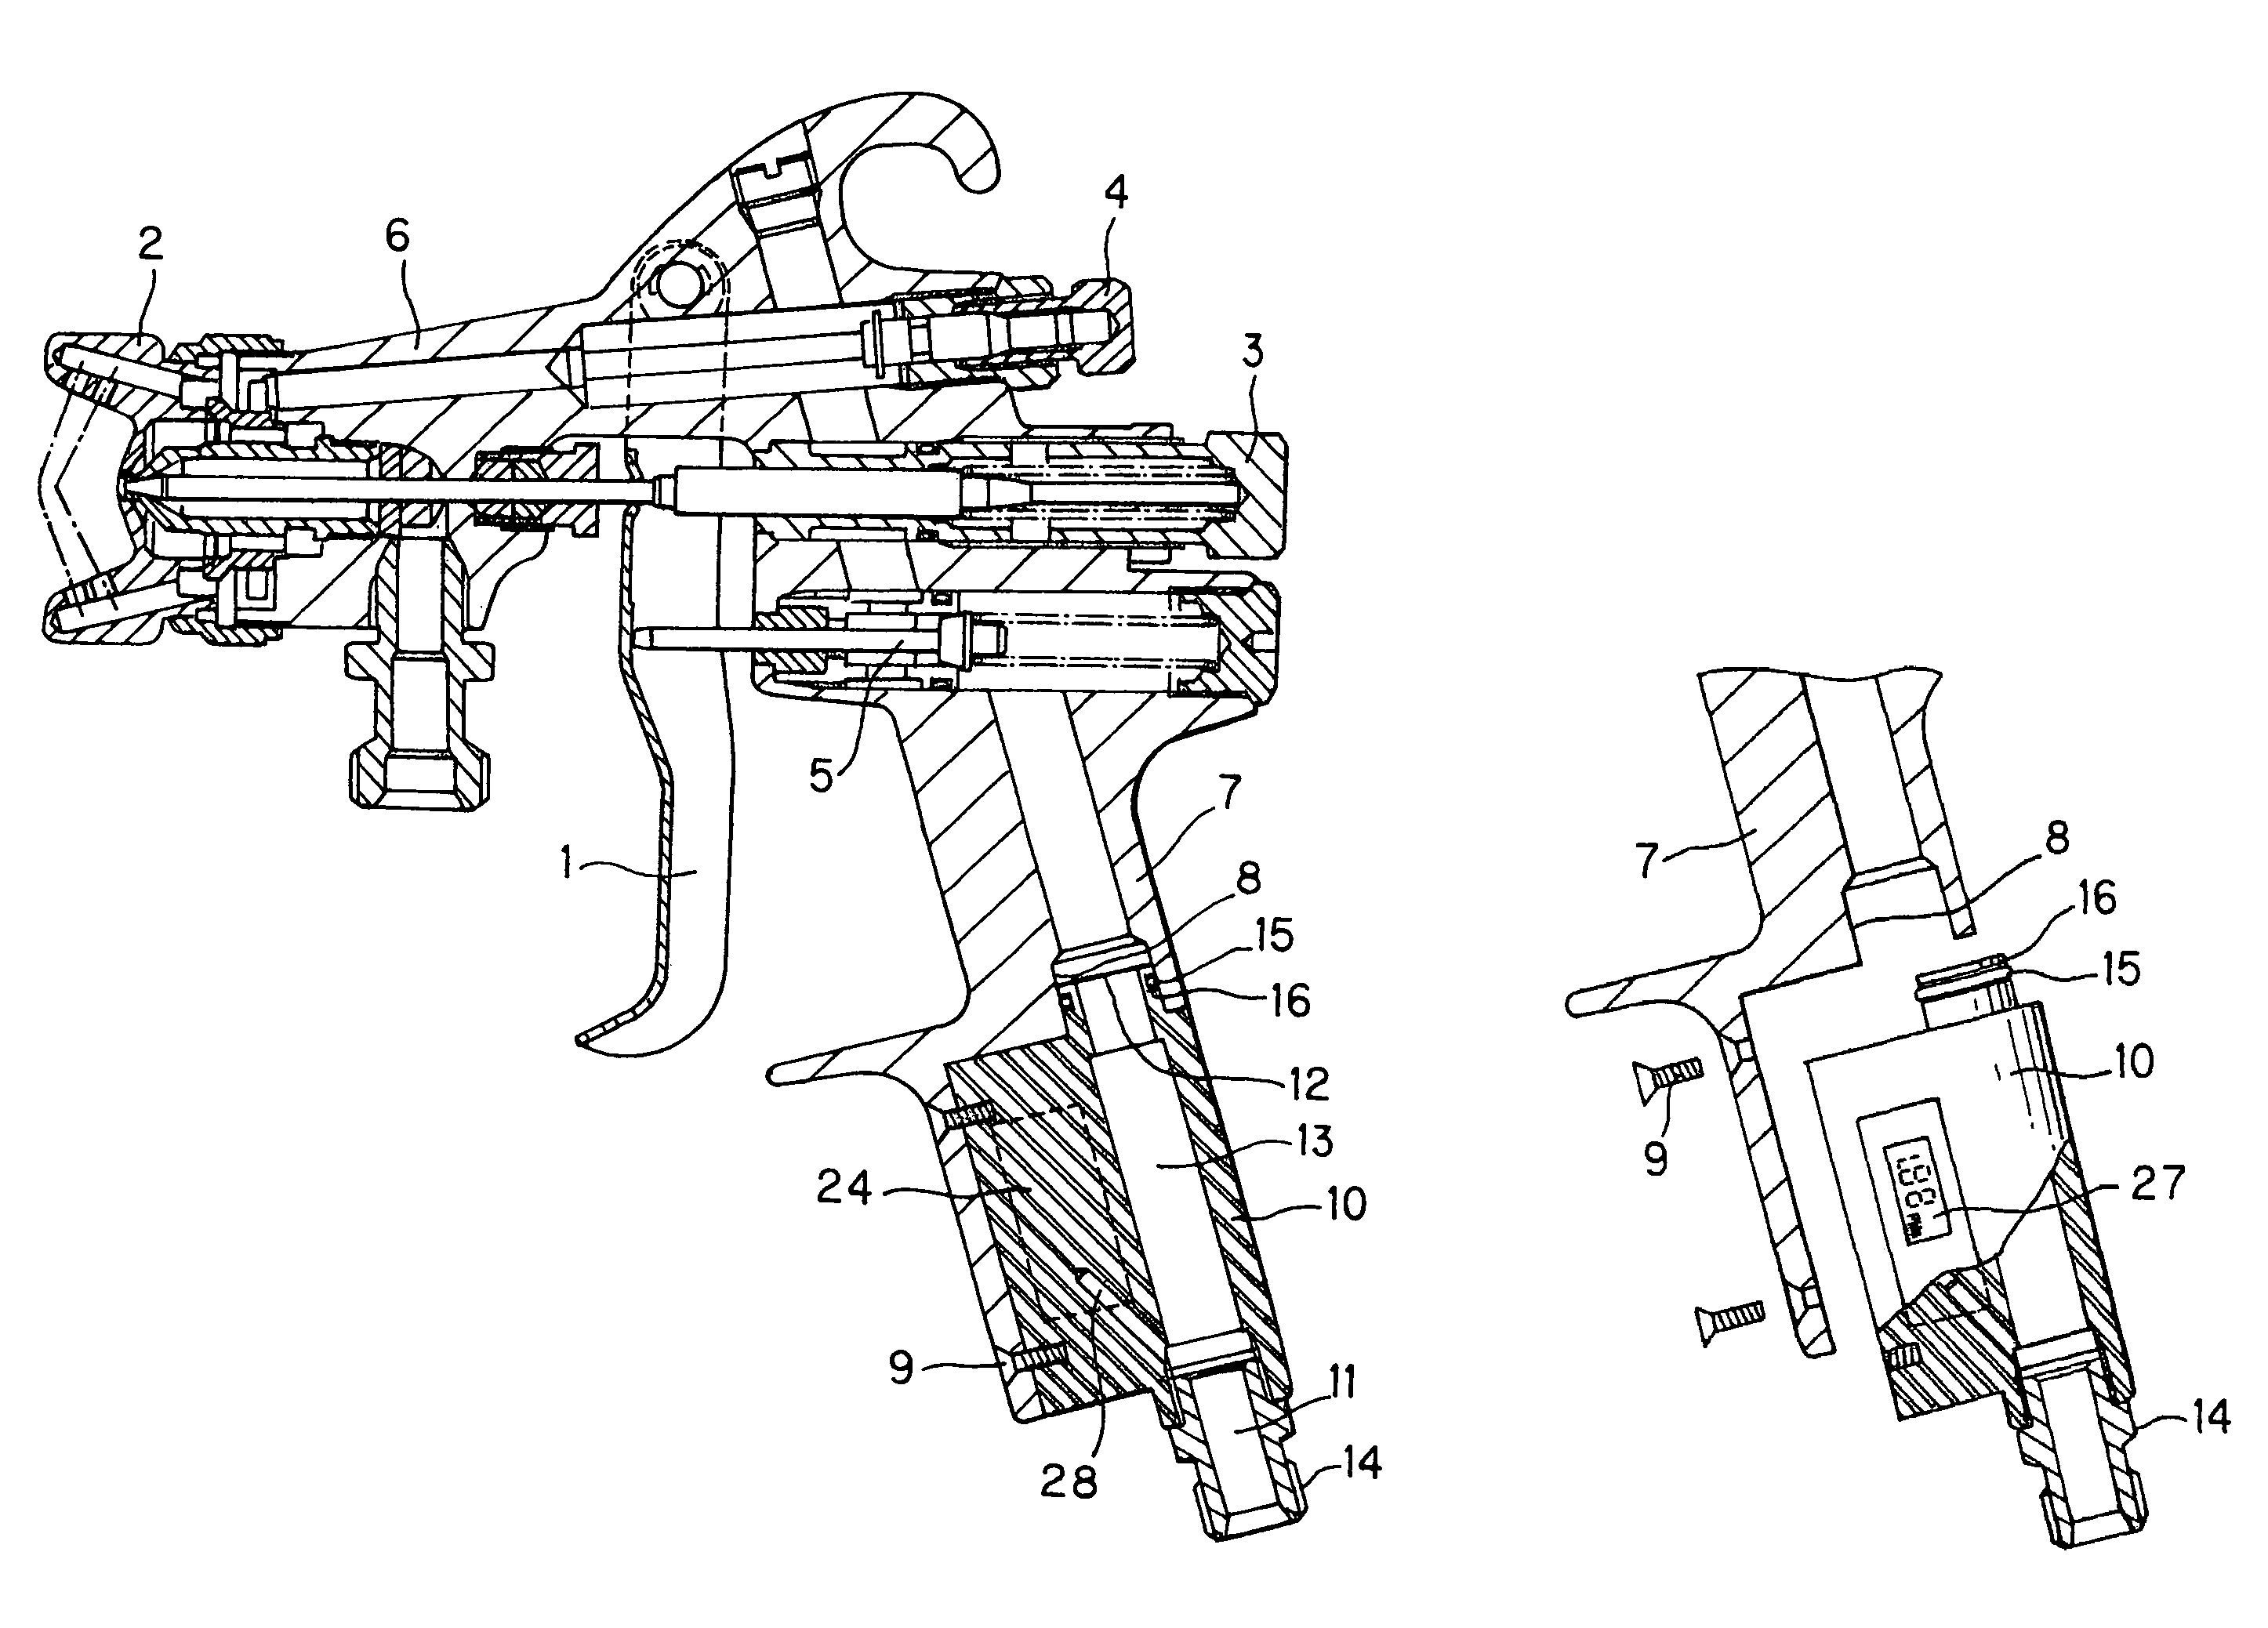 Spray gun with pressure display